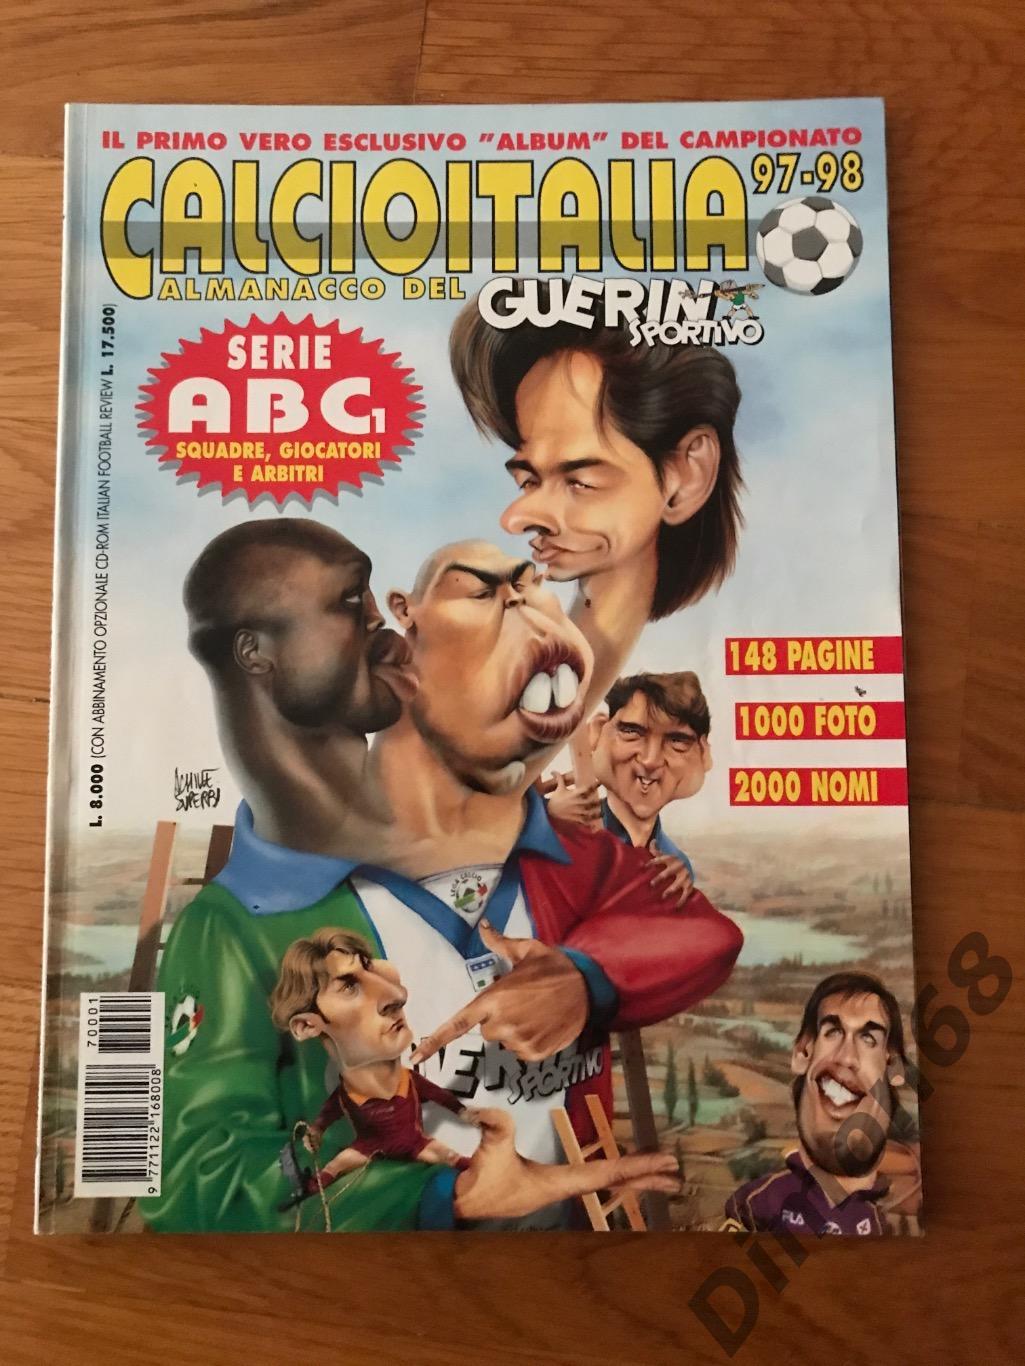 Calcioitalia guerin sportivo 97/98 представление команд серии A,B,C целый